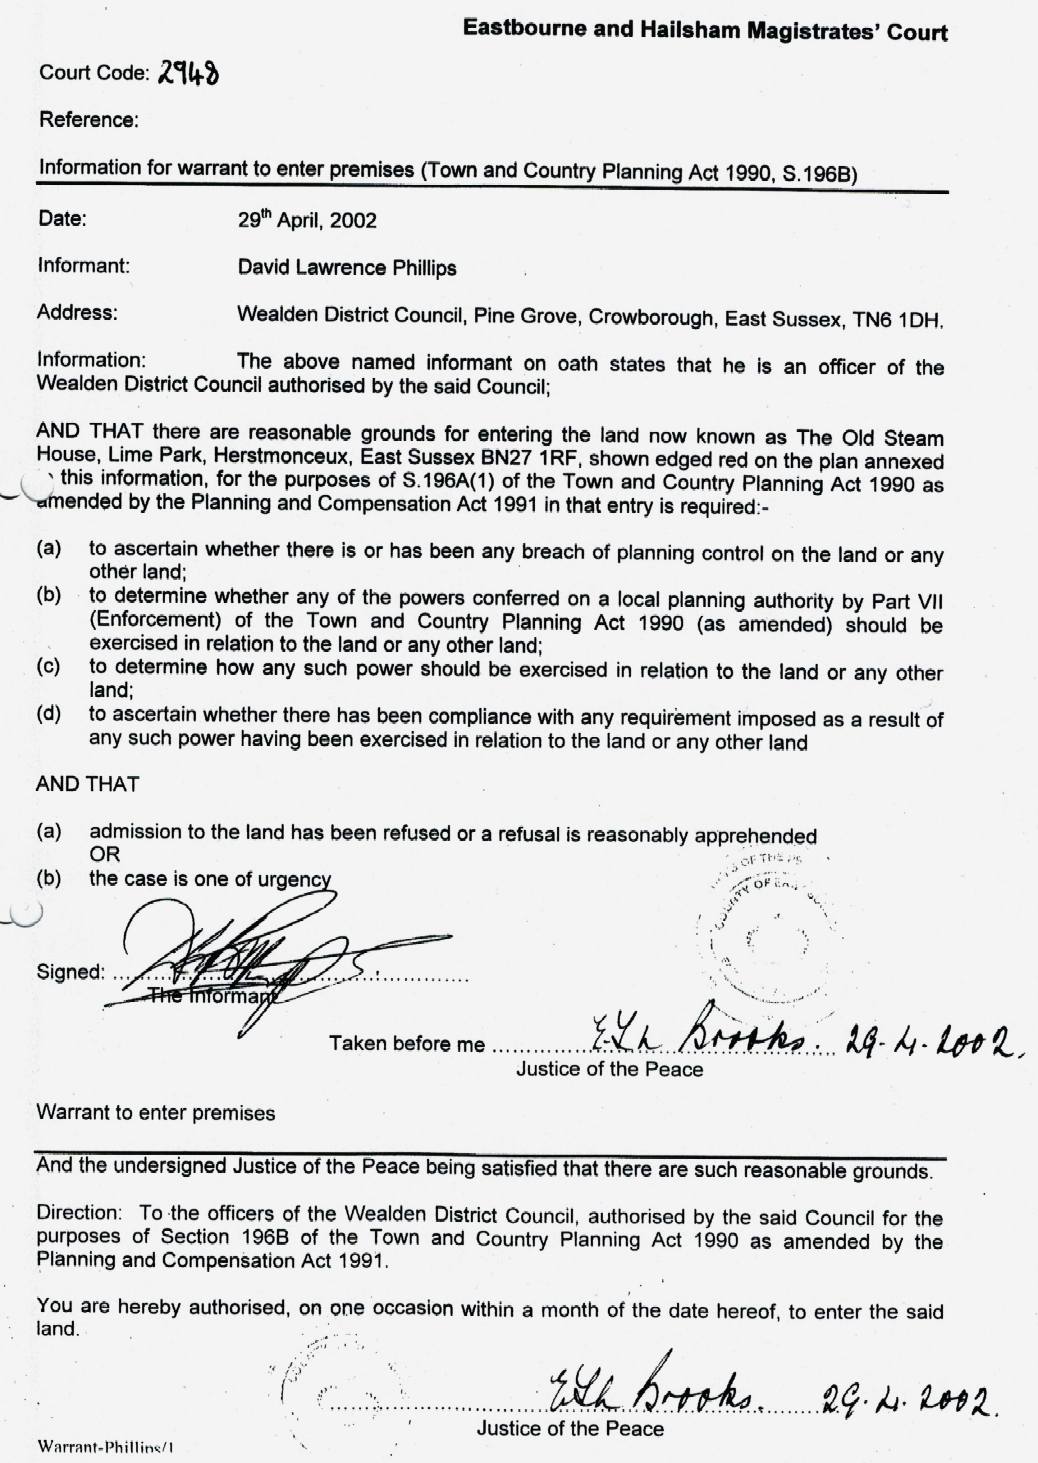 Fraudulent warrant to enter premises Justice Peace E Brooks 29 April 2002